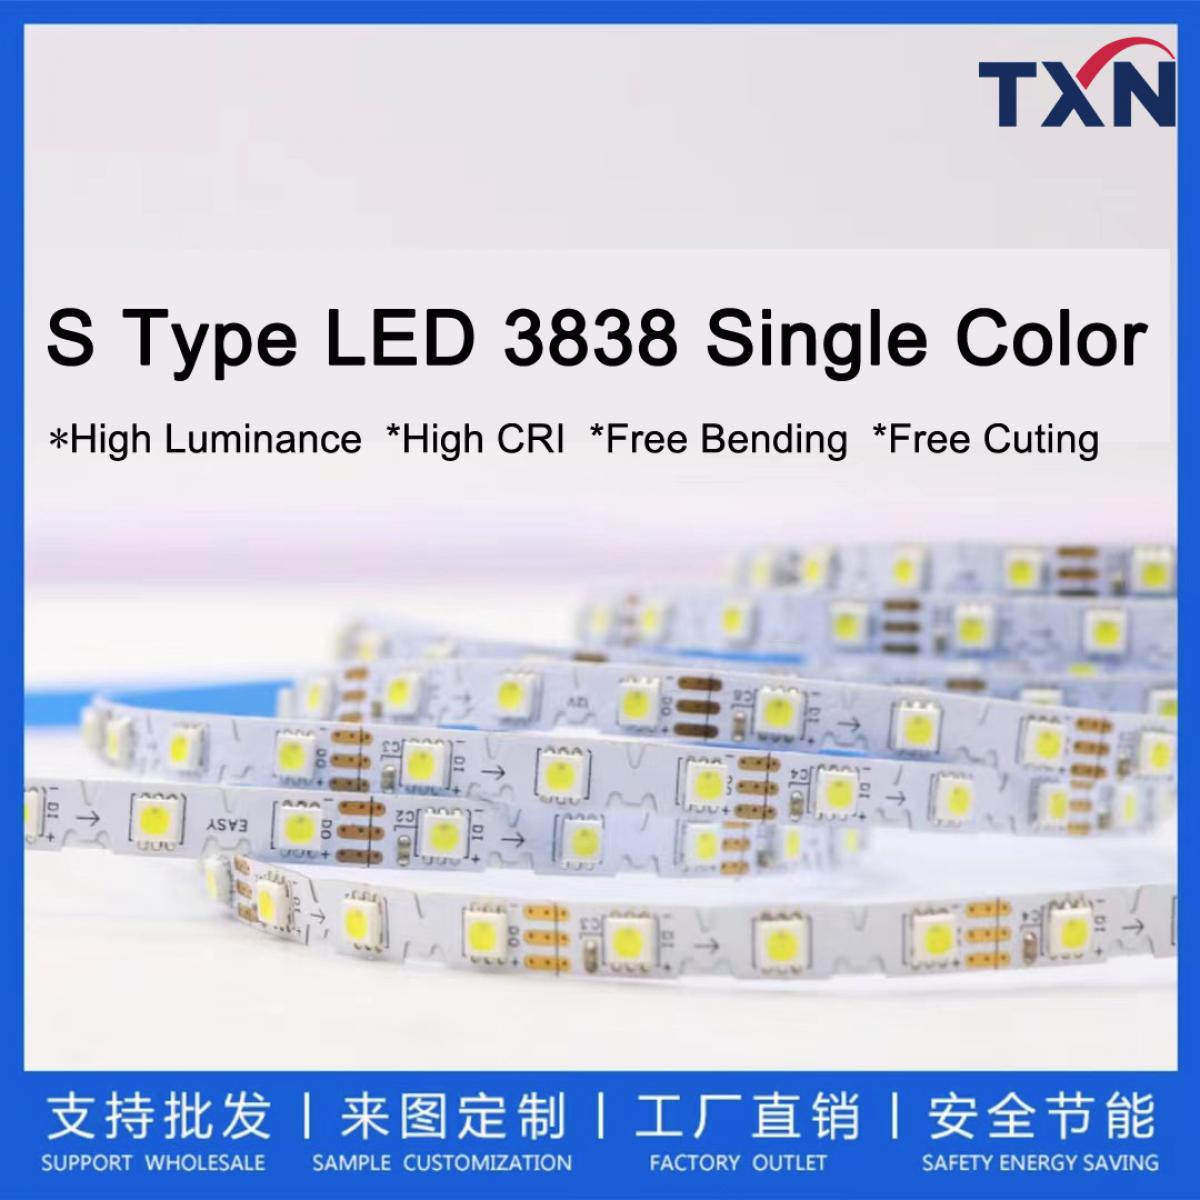 Low Voltage S Type 3838 LED Pixel Strip